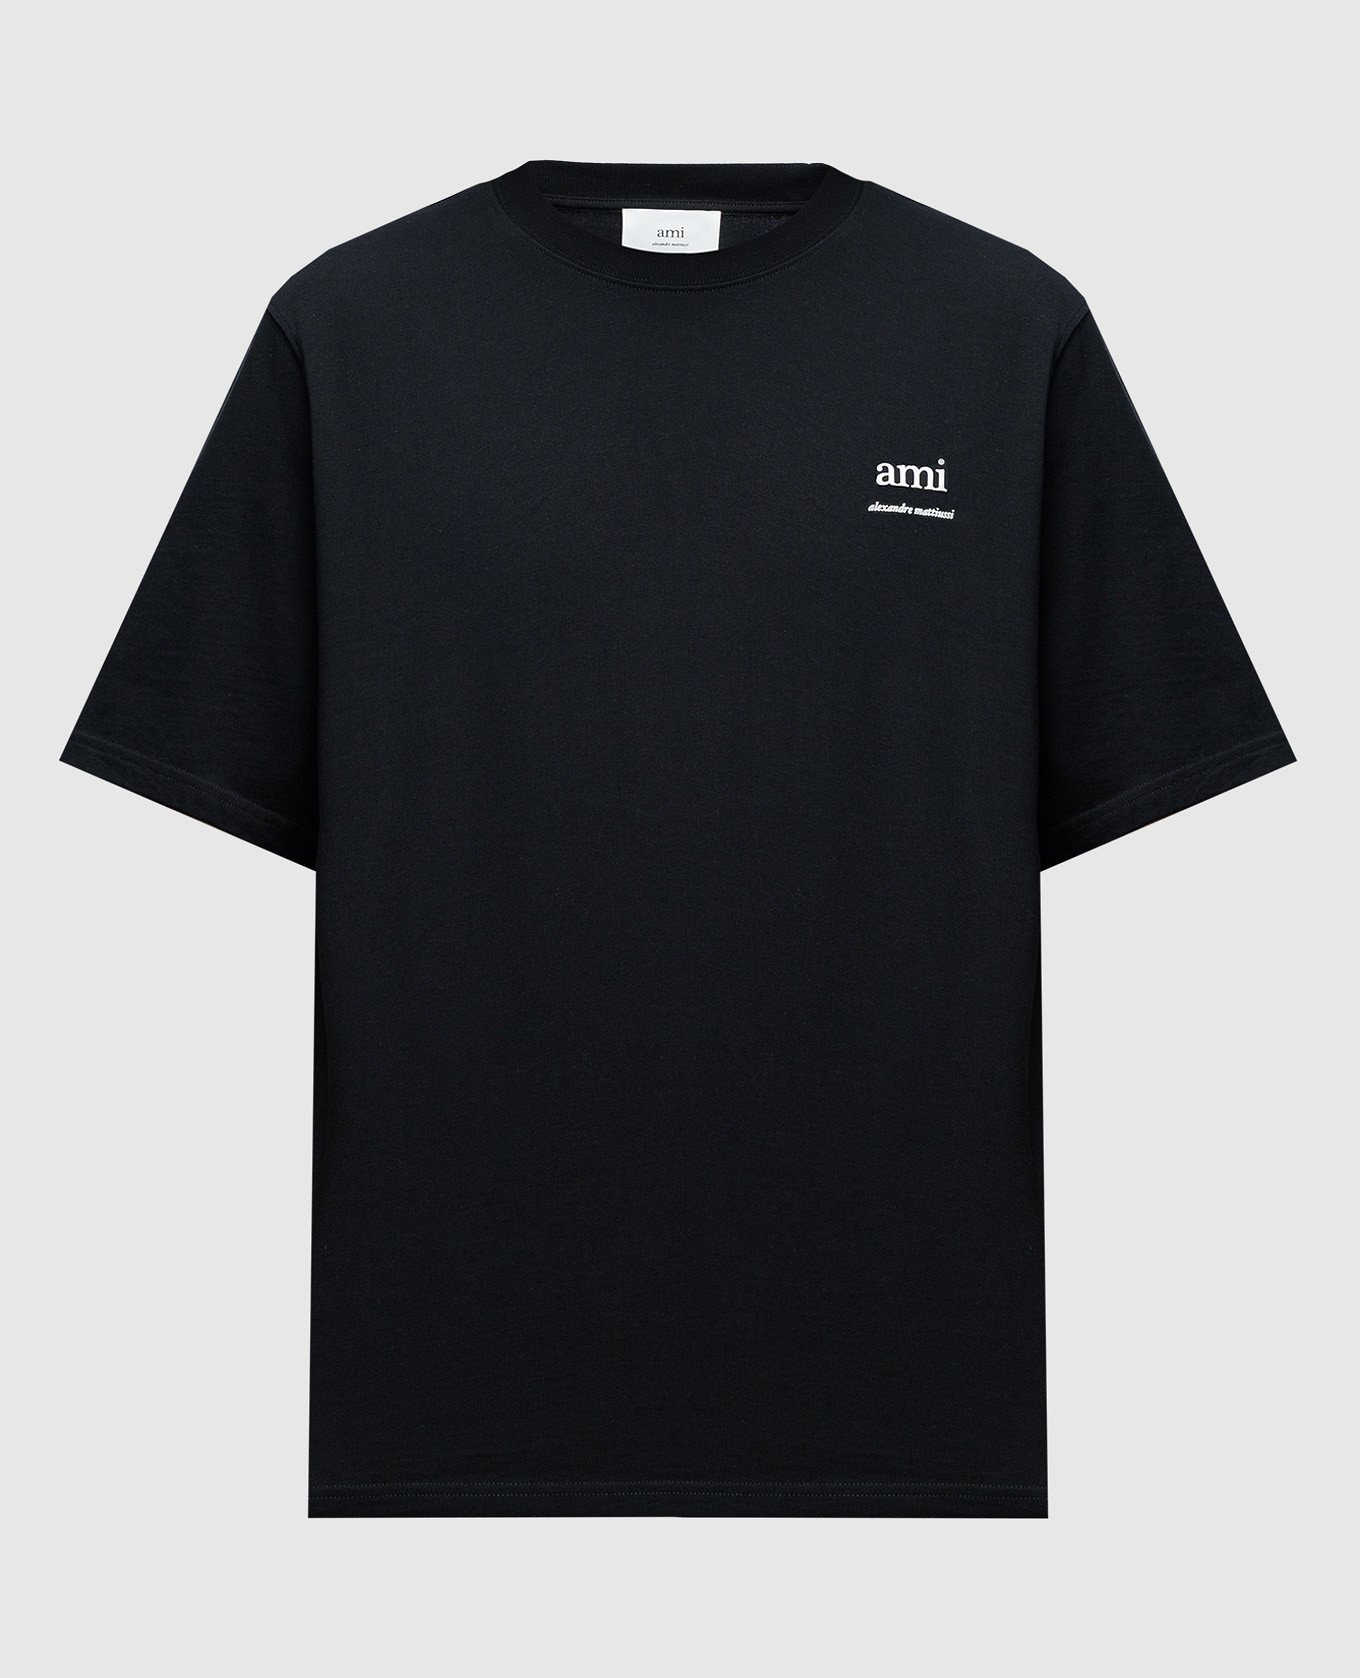 Black t-shirt with a print